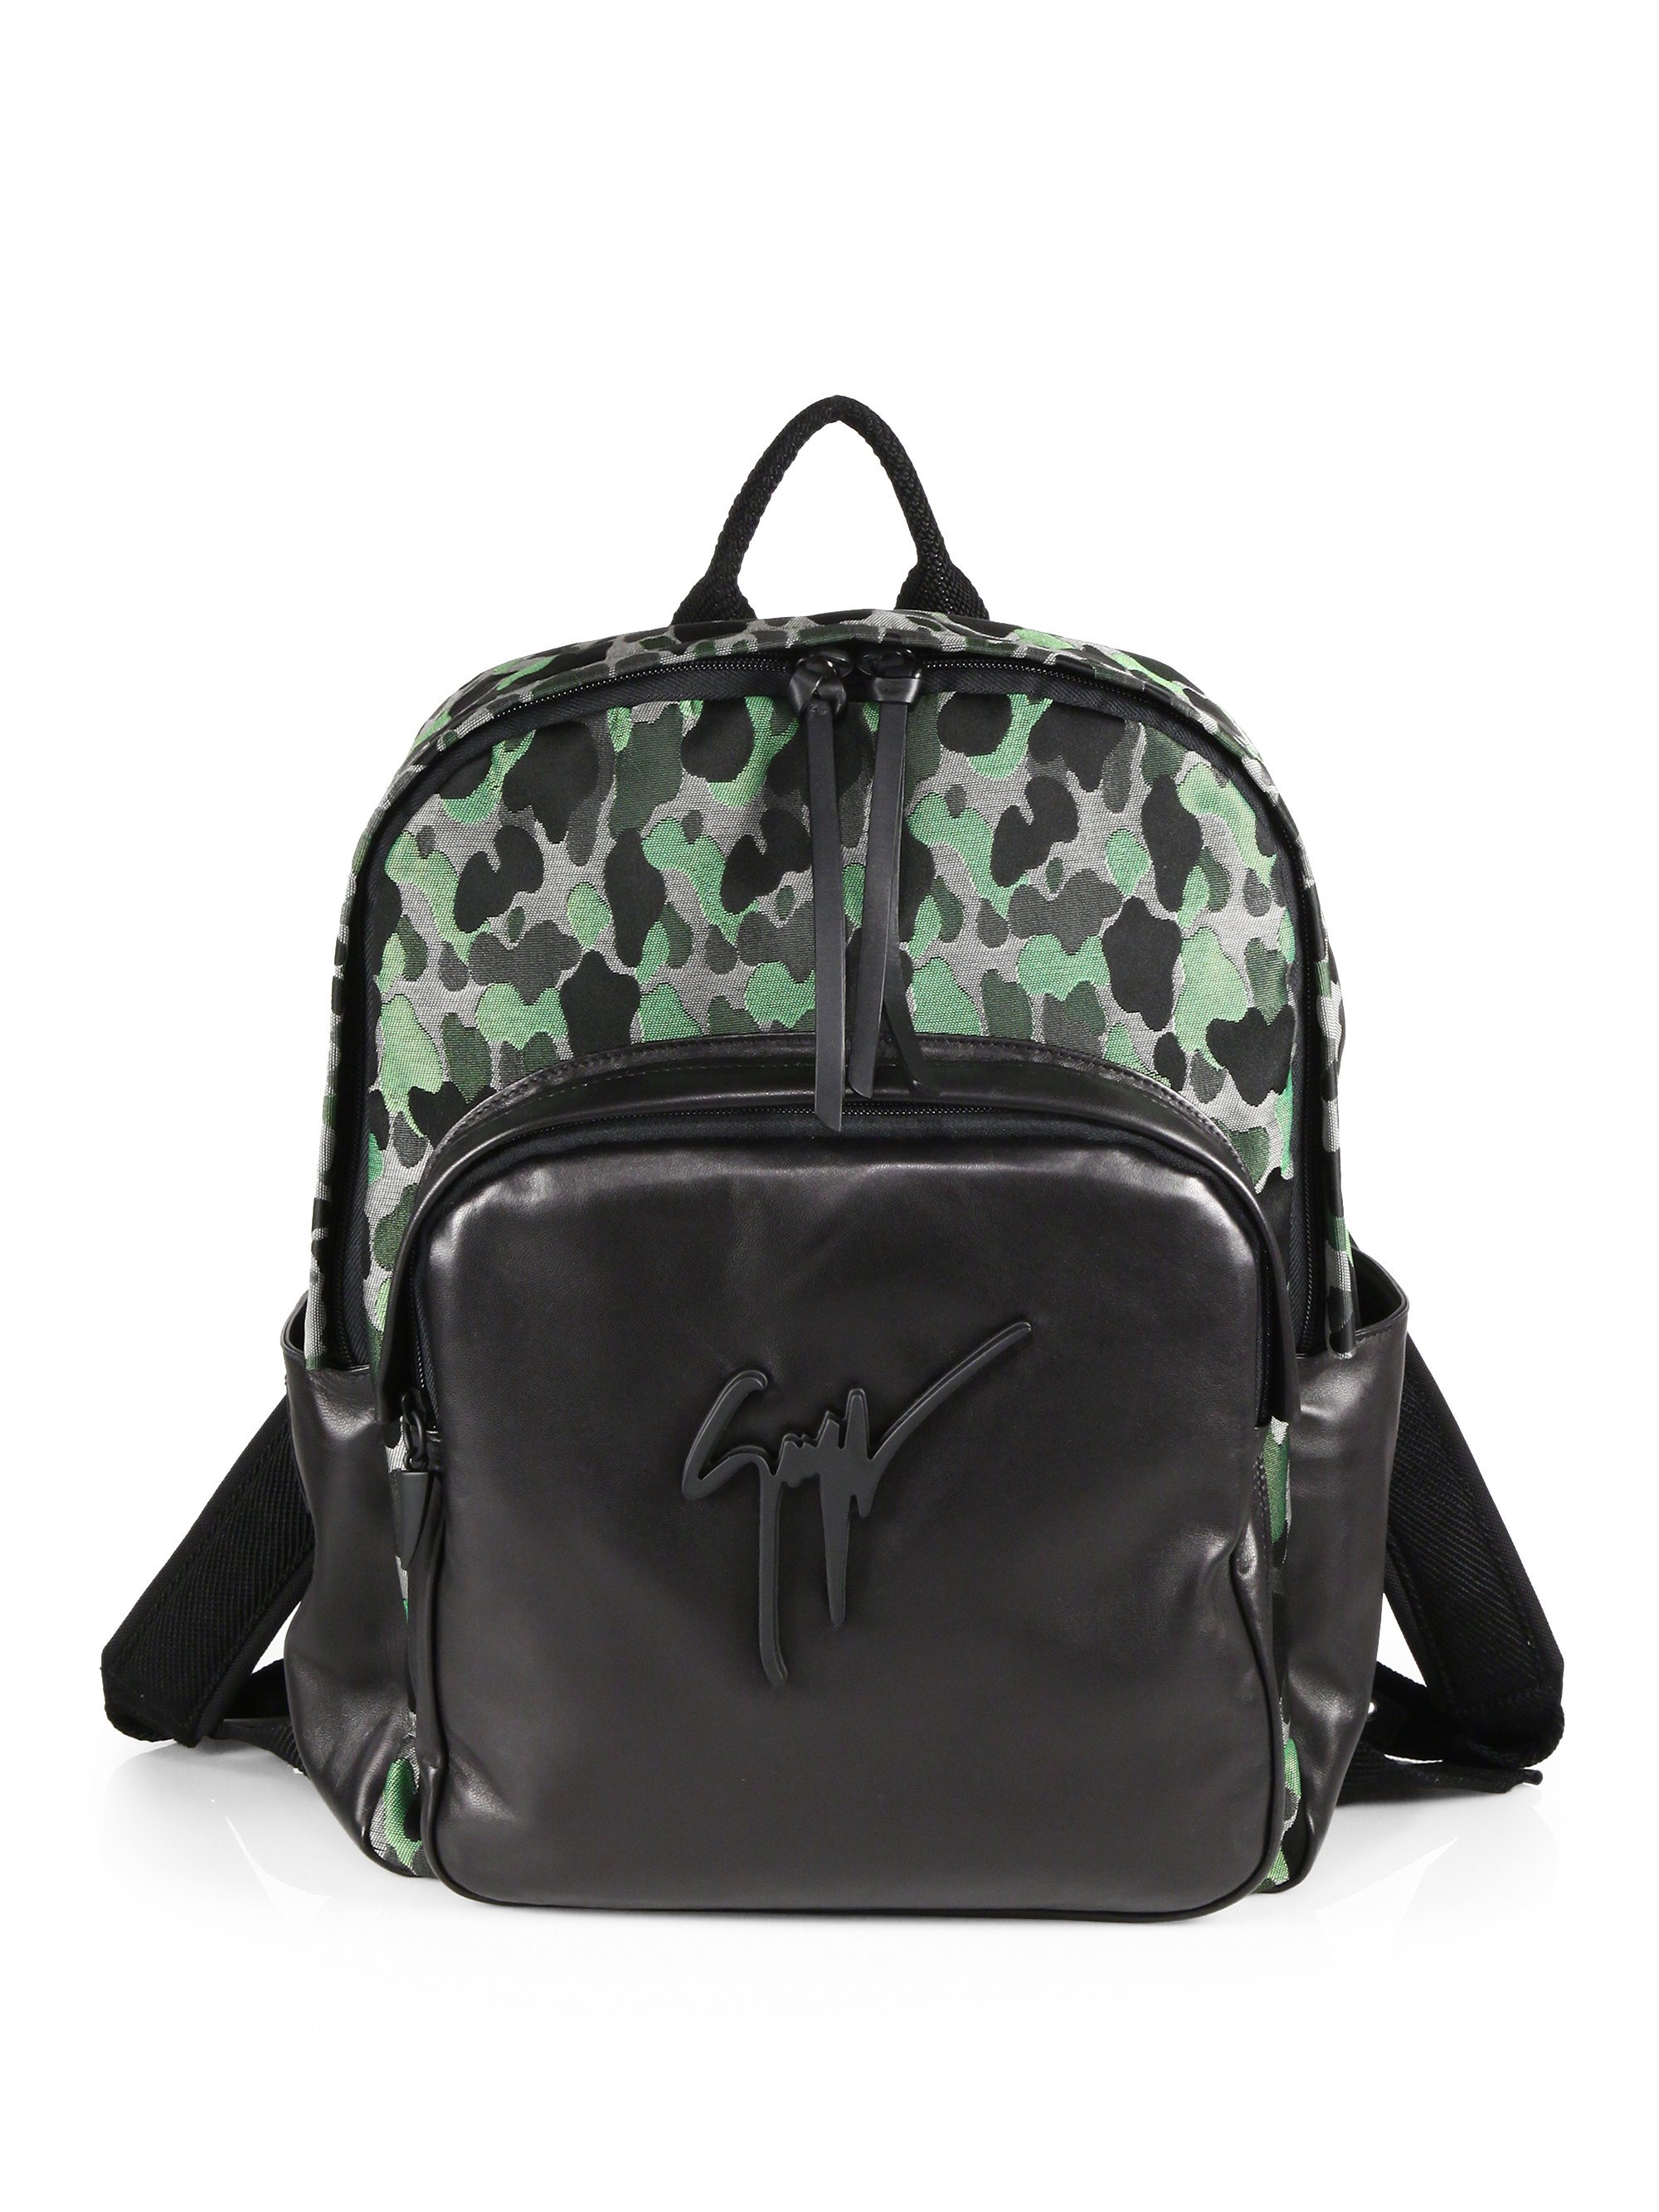 Giuseppe zanotti Camo-print Leather Backpack in Green for Men | Lyst